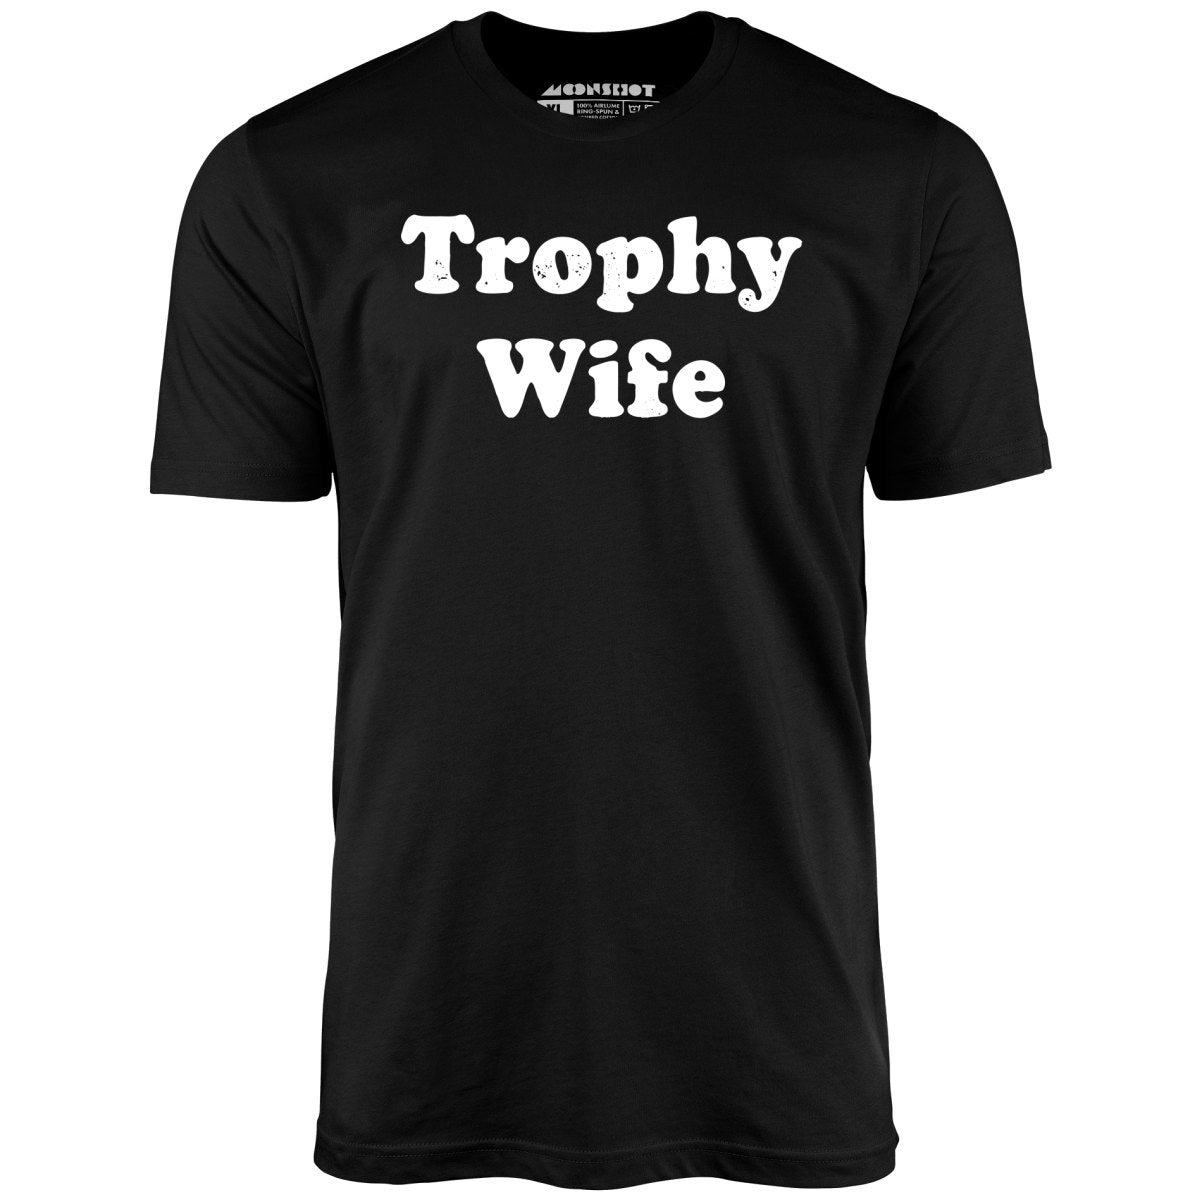 Trophy Wife - Unisex T-Shirt